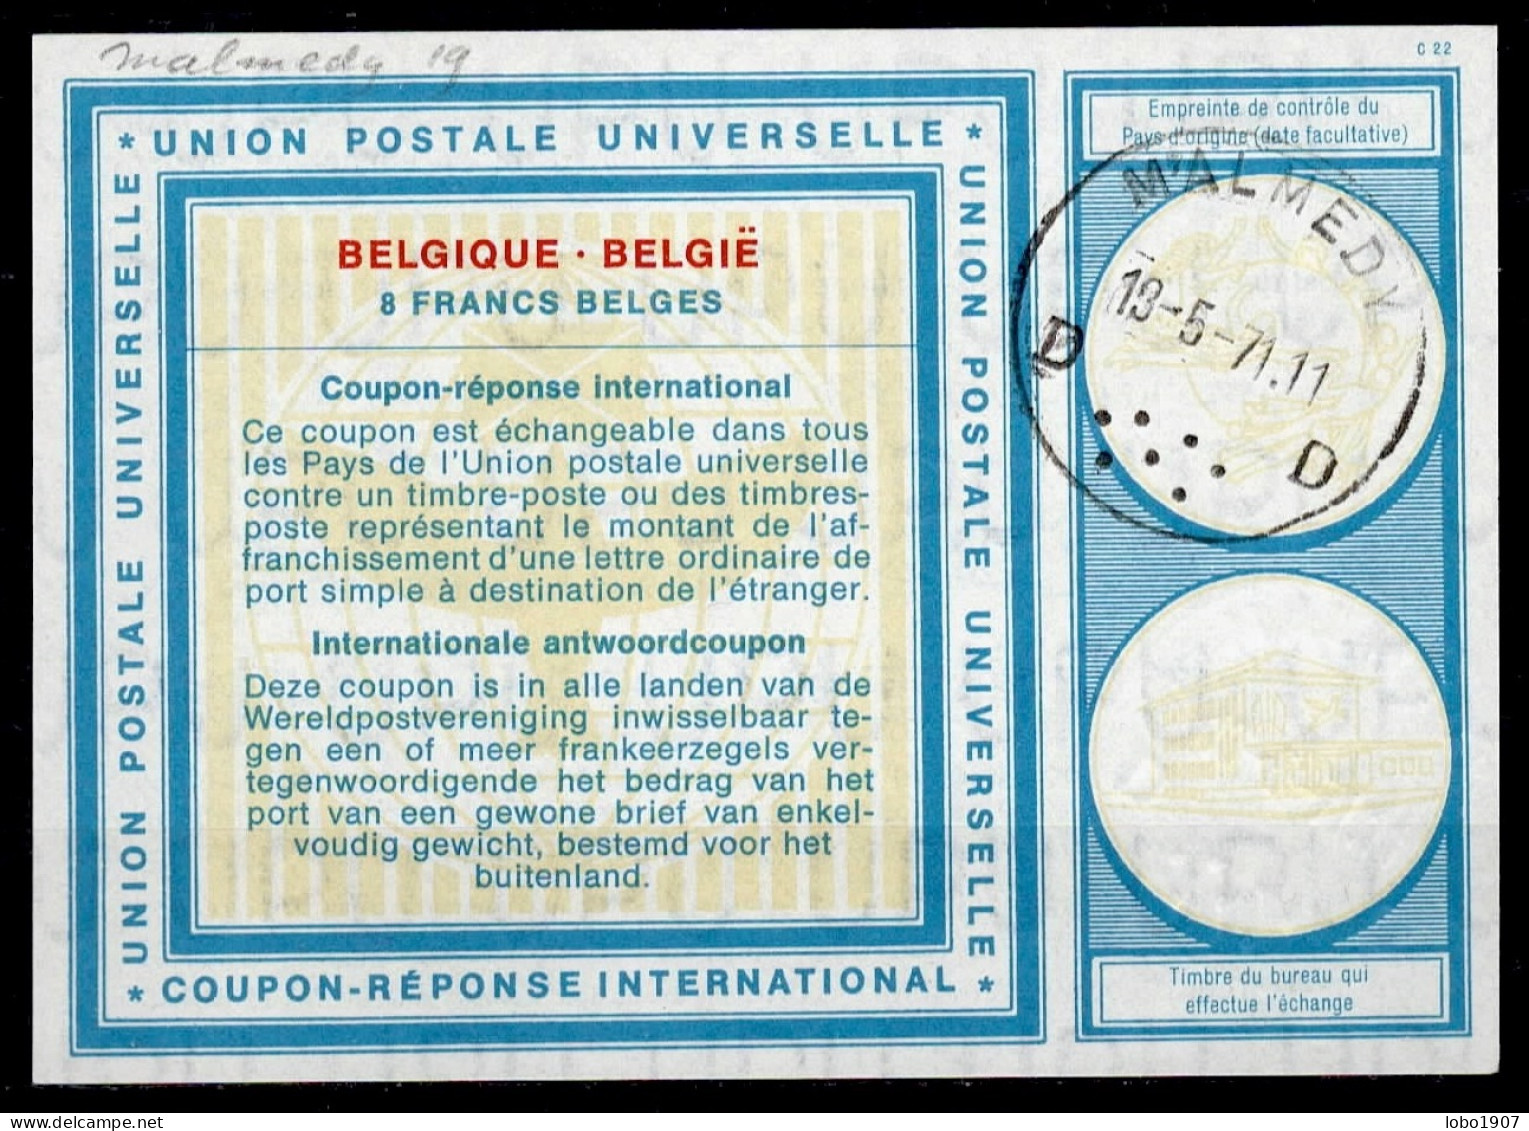 MALMEDY 13.05.71    BELGIQUE BELGIE BELGIUM  Vi19  8 FRANCS BELGES Int. Reply Coupon Reponse Antwortschein IAS IRC - Buoni Risposta Internazionali (Coupon)